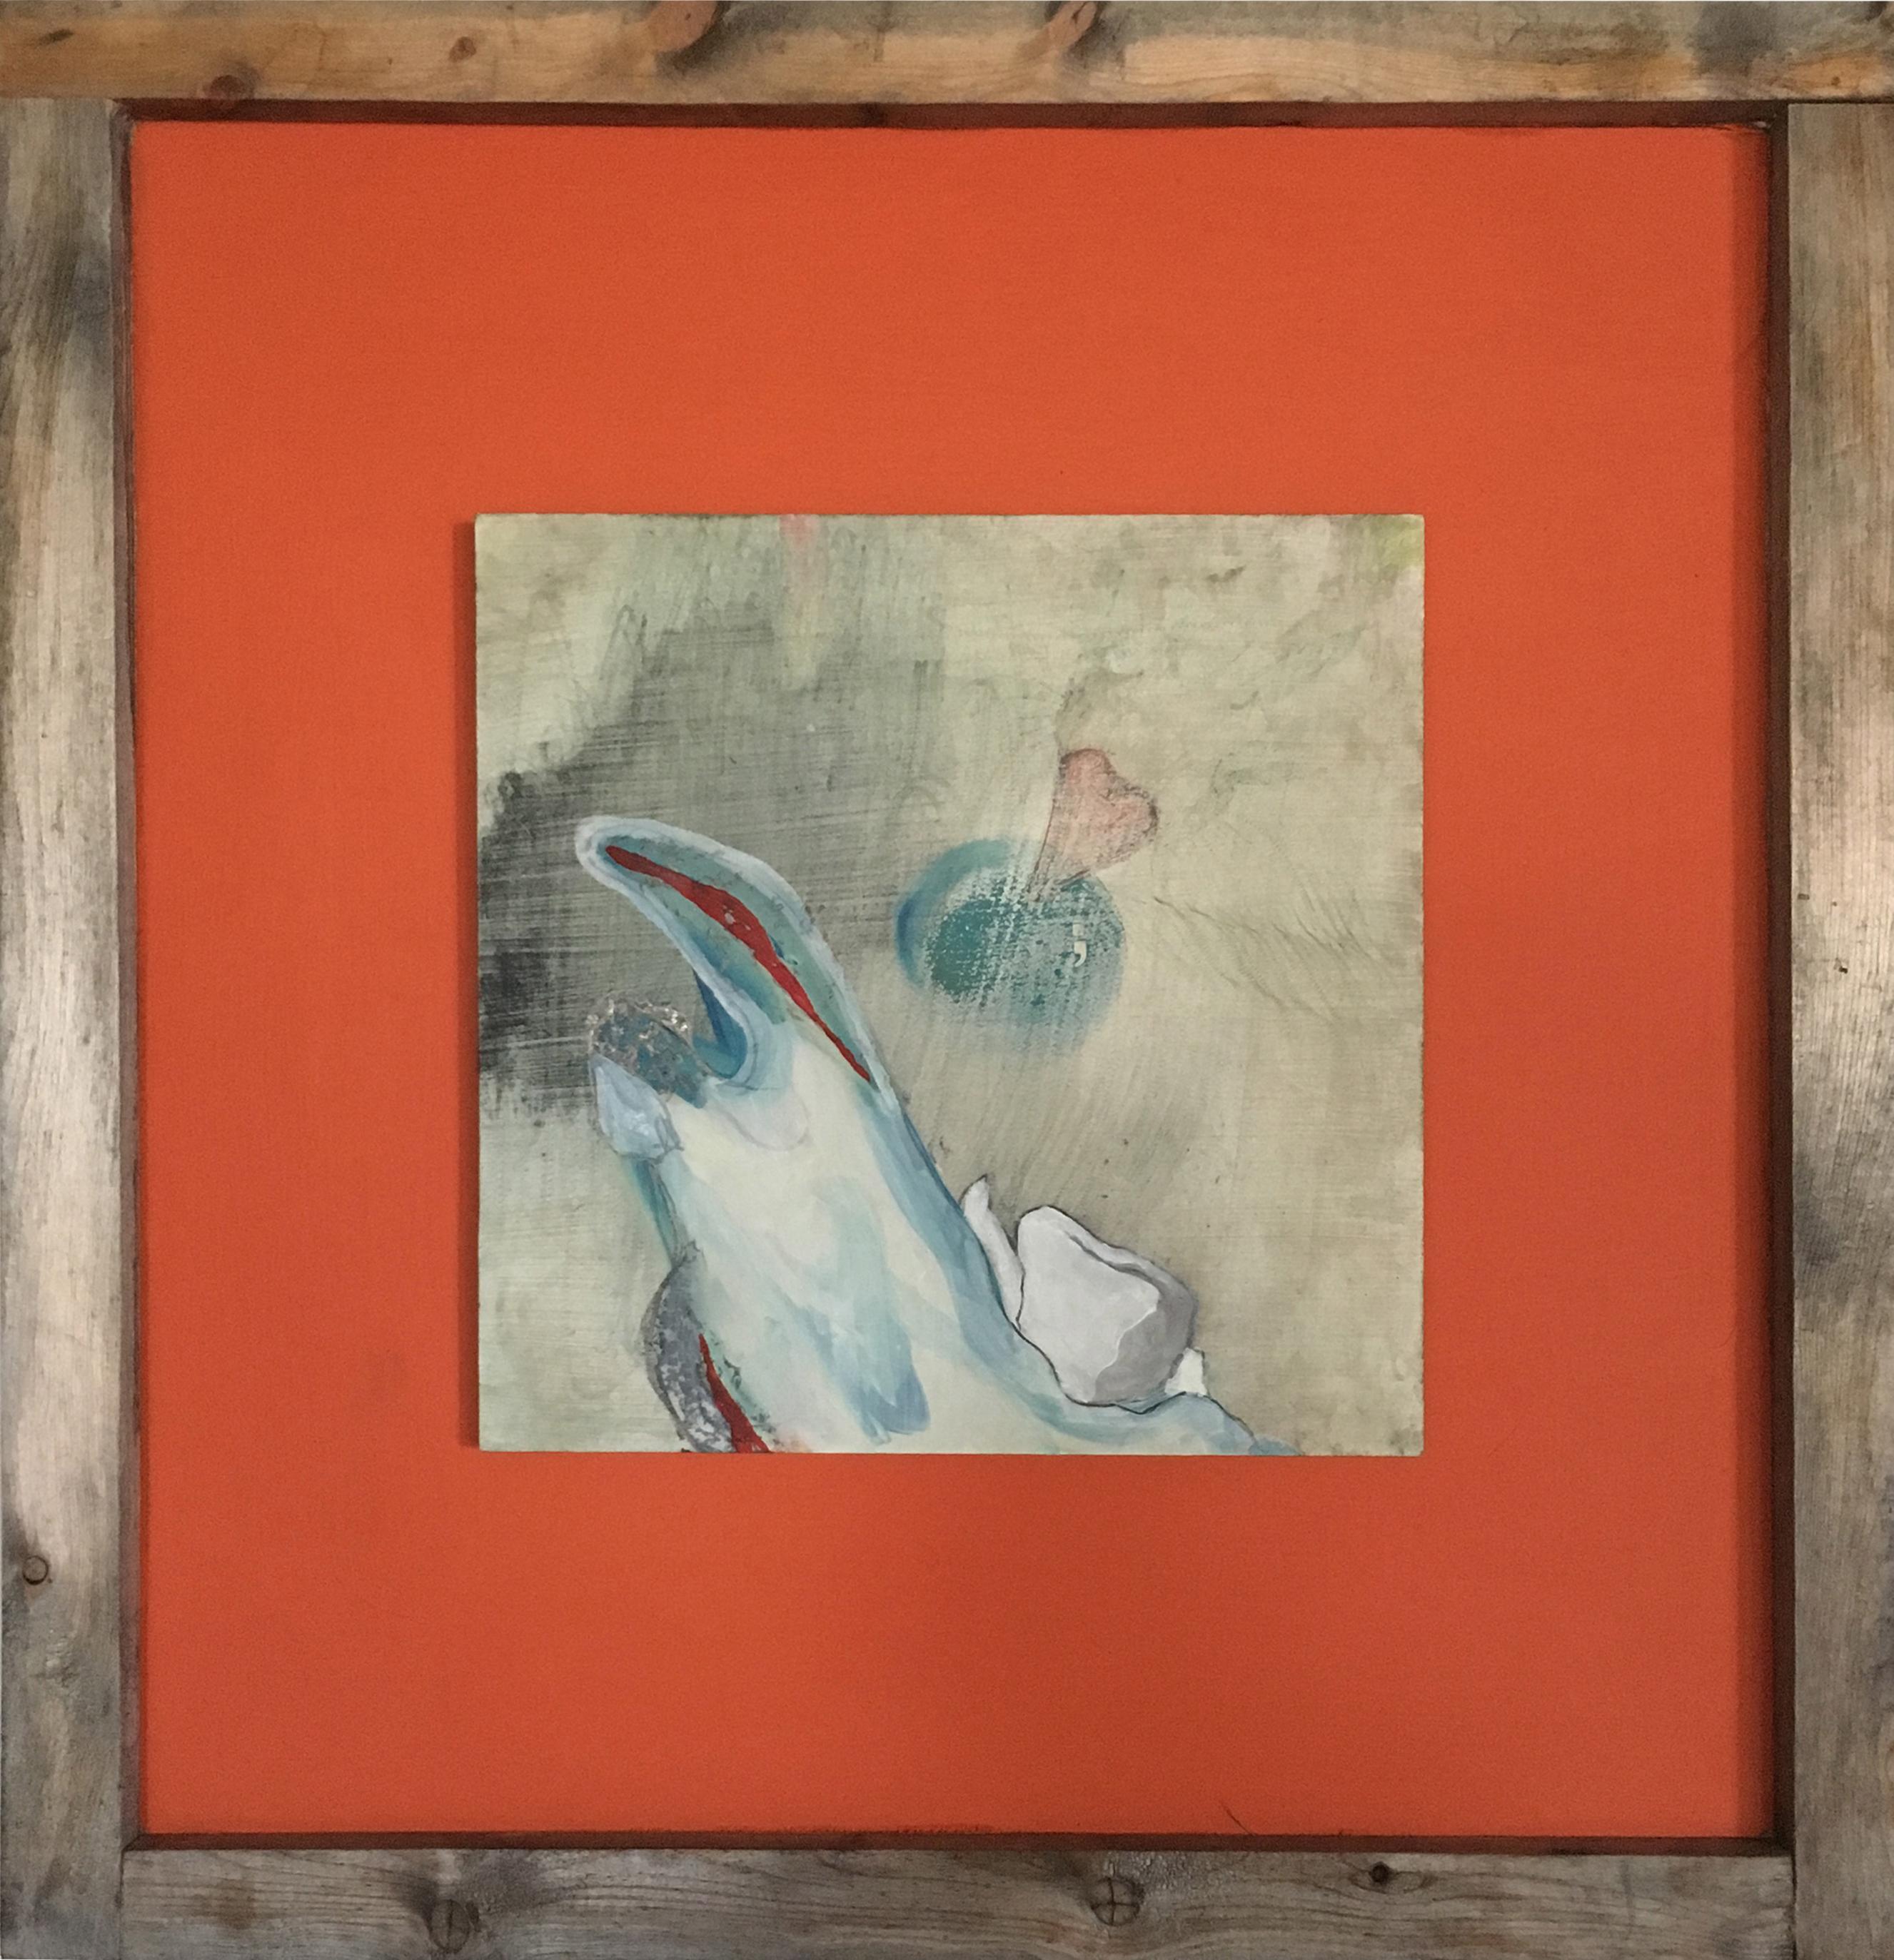 Abstract Composition in Orange, Blue and Gray  "Nerve River #2" - Mixed Media Art by Dott von Schneider